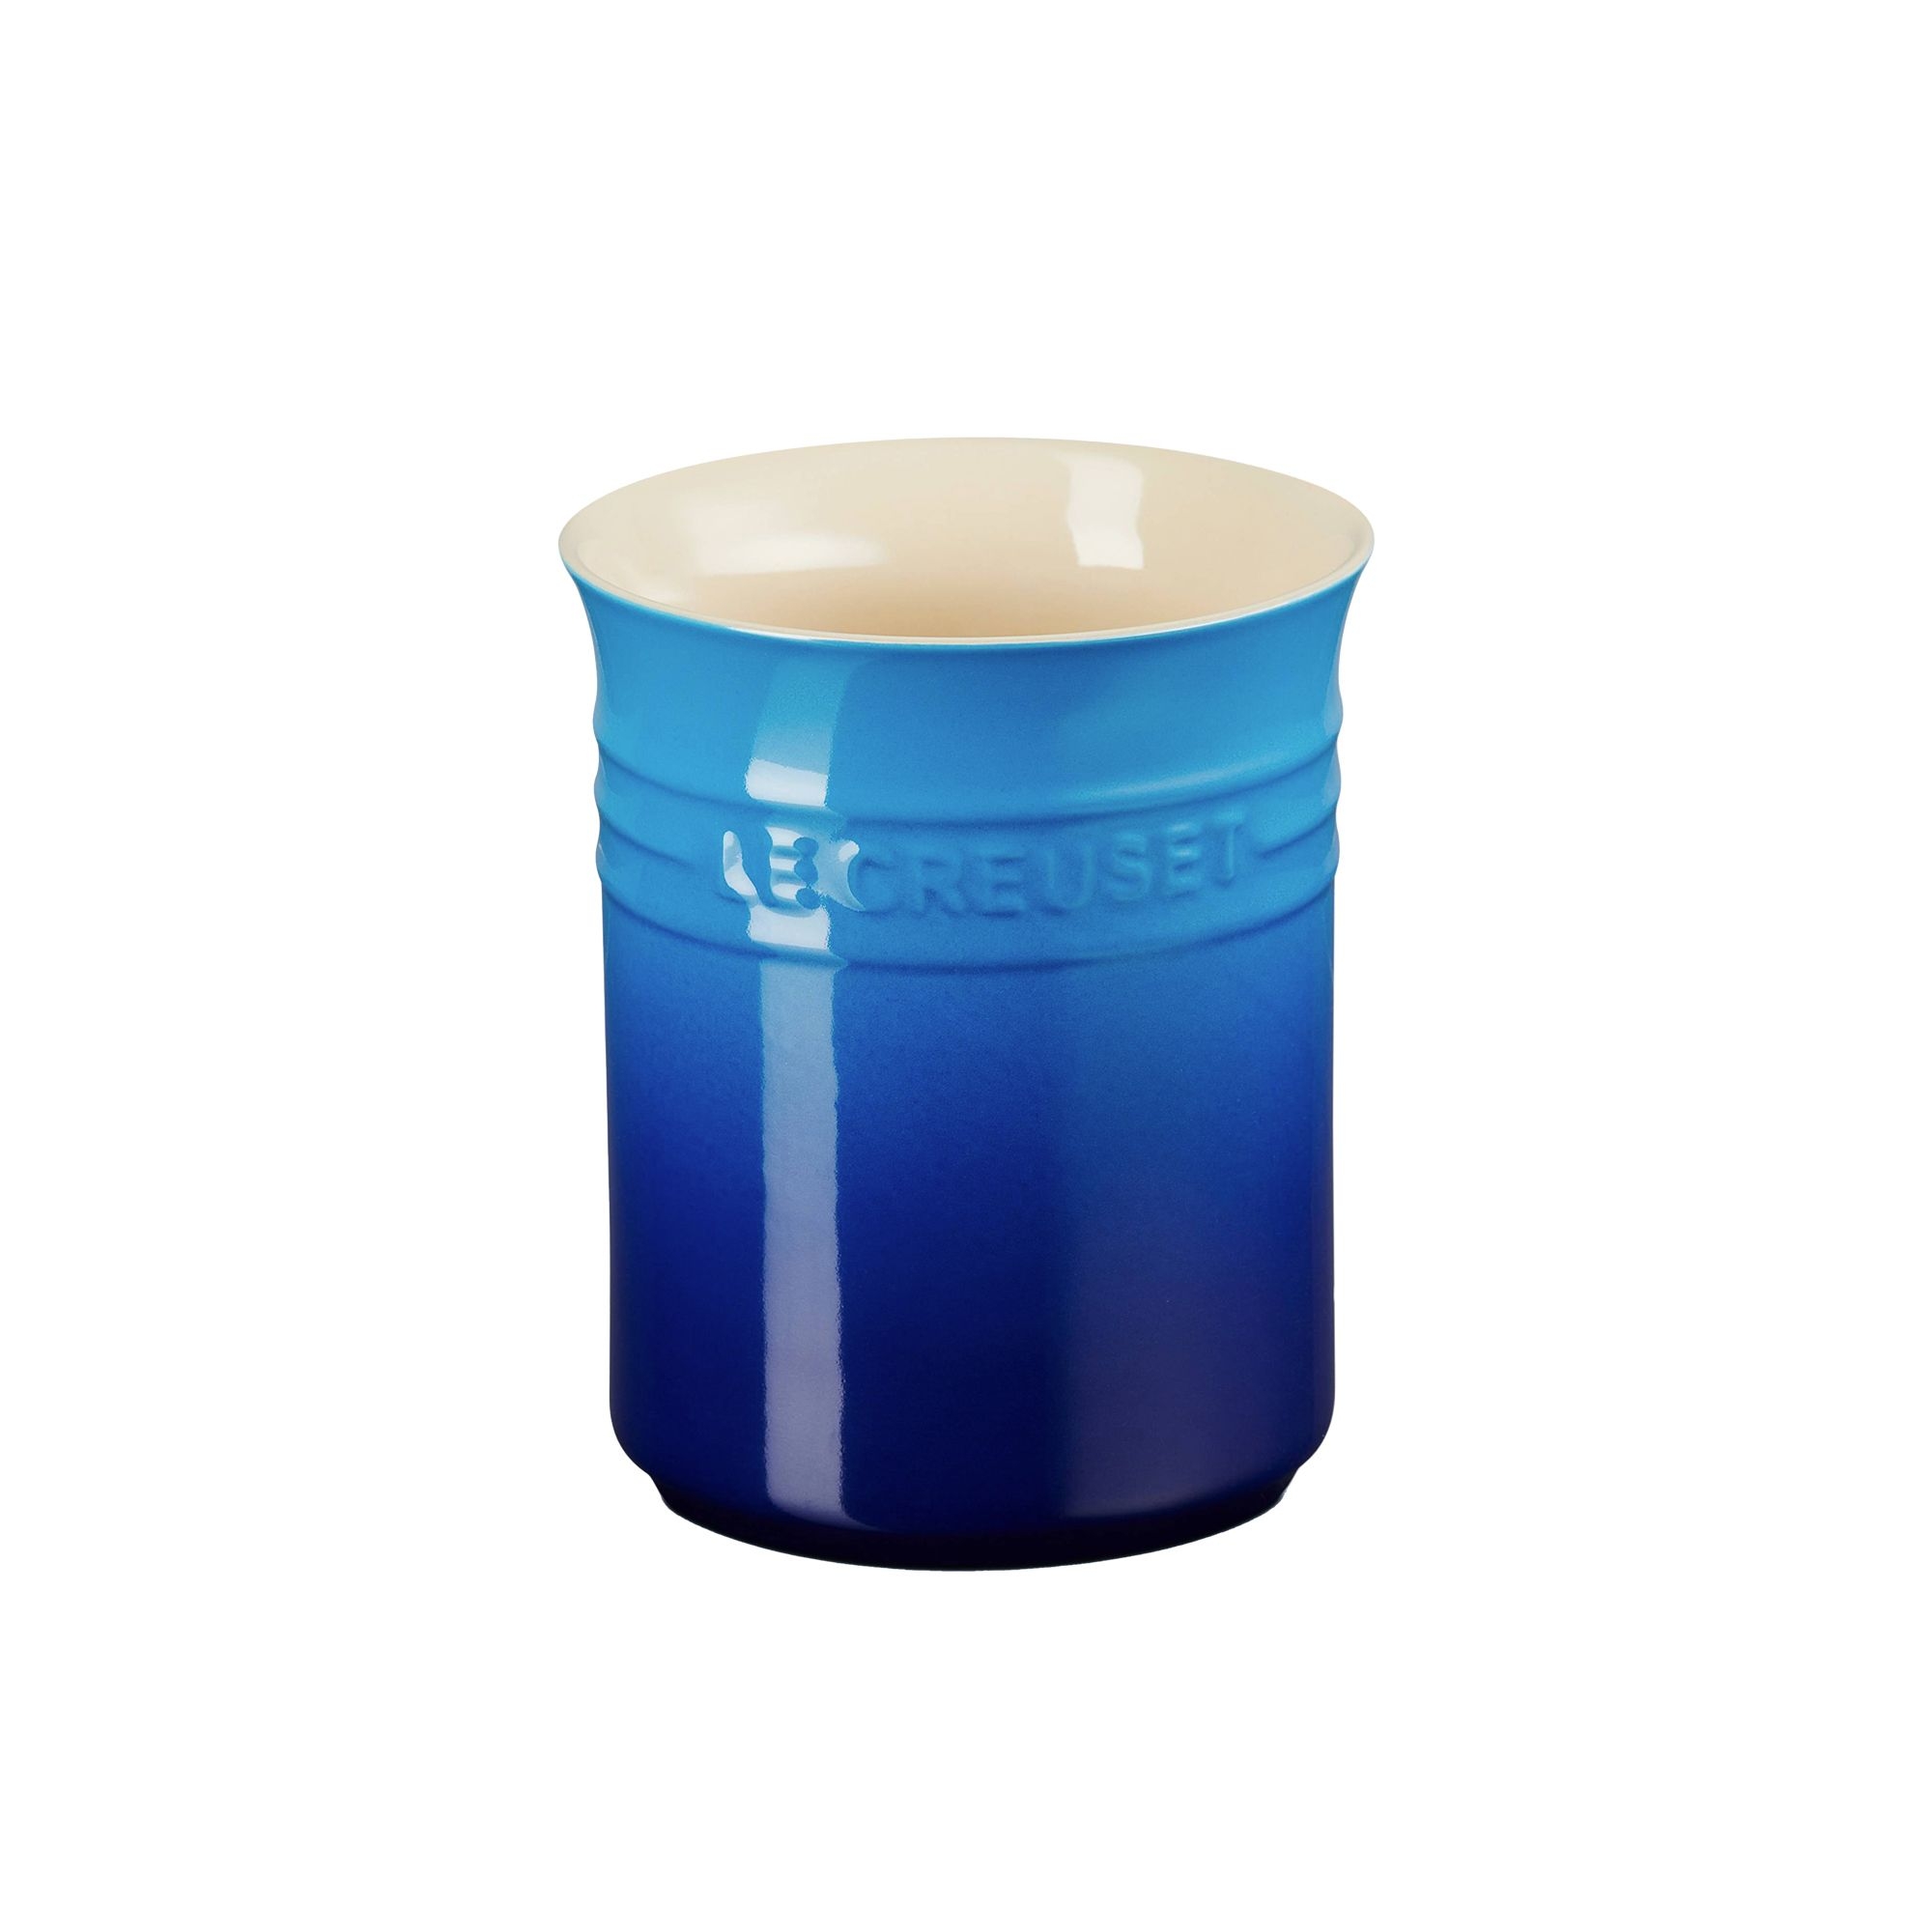 Le Creuset Stoneware Small Utensil Jar Azure Blue Image 1